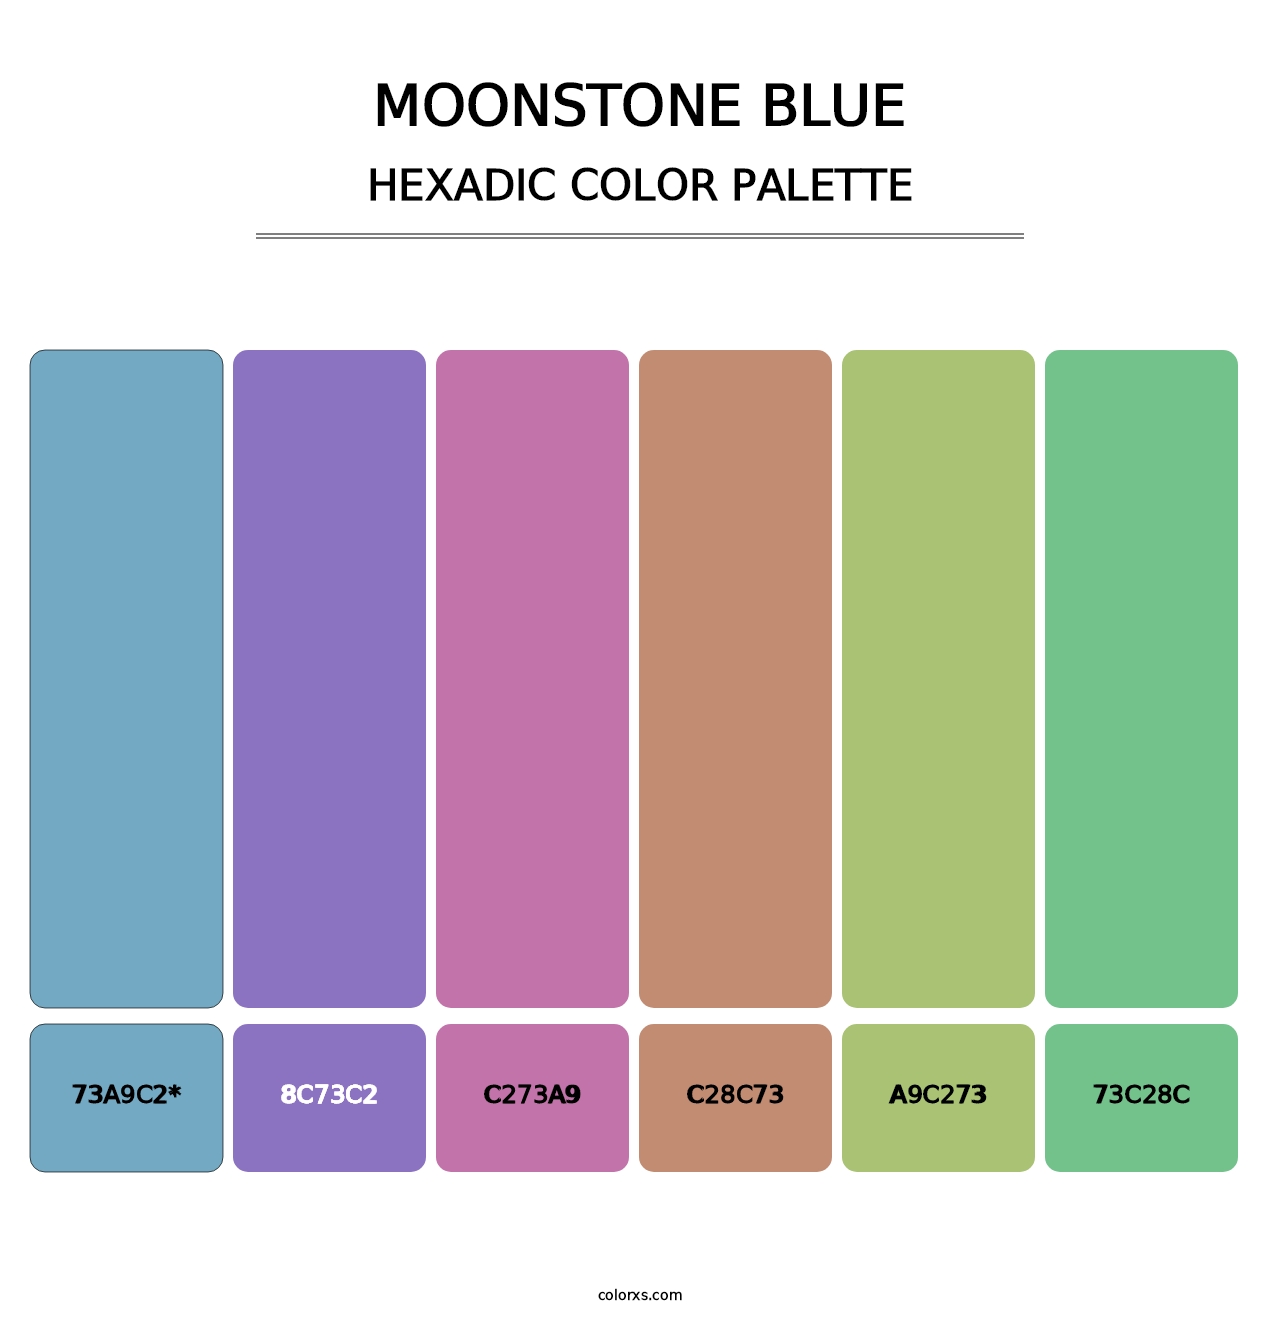 Moonstone Blue - Hexadic Color Palette